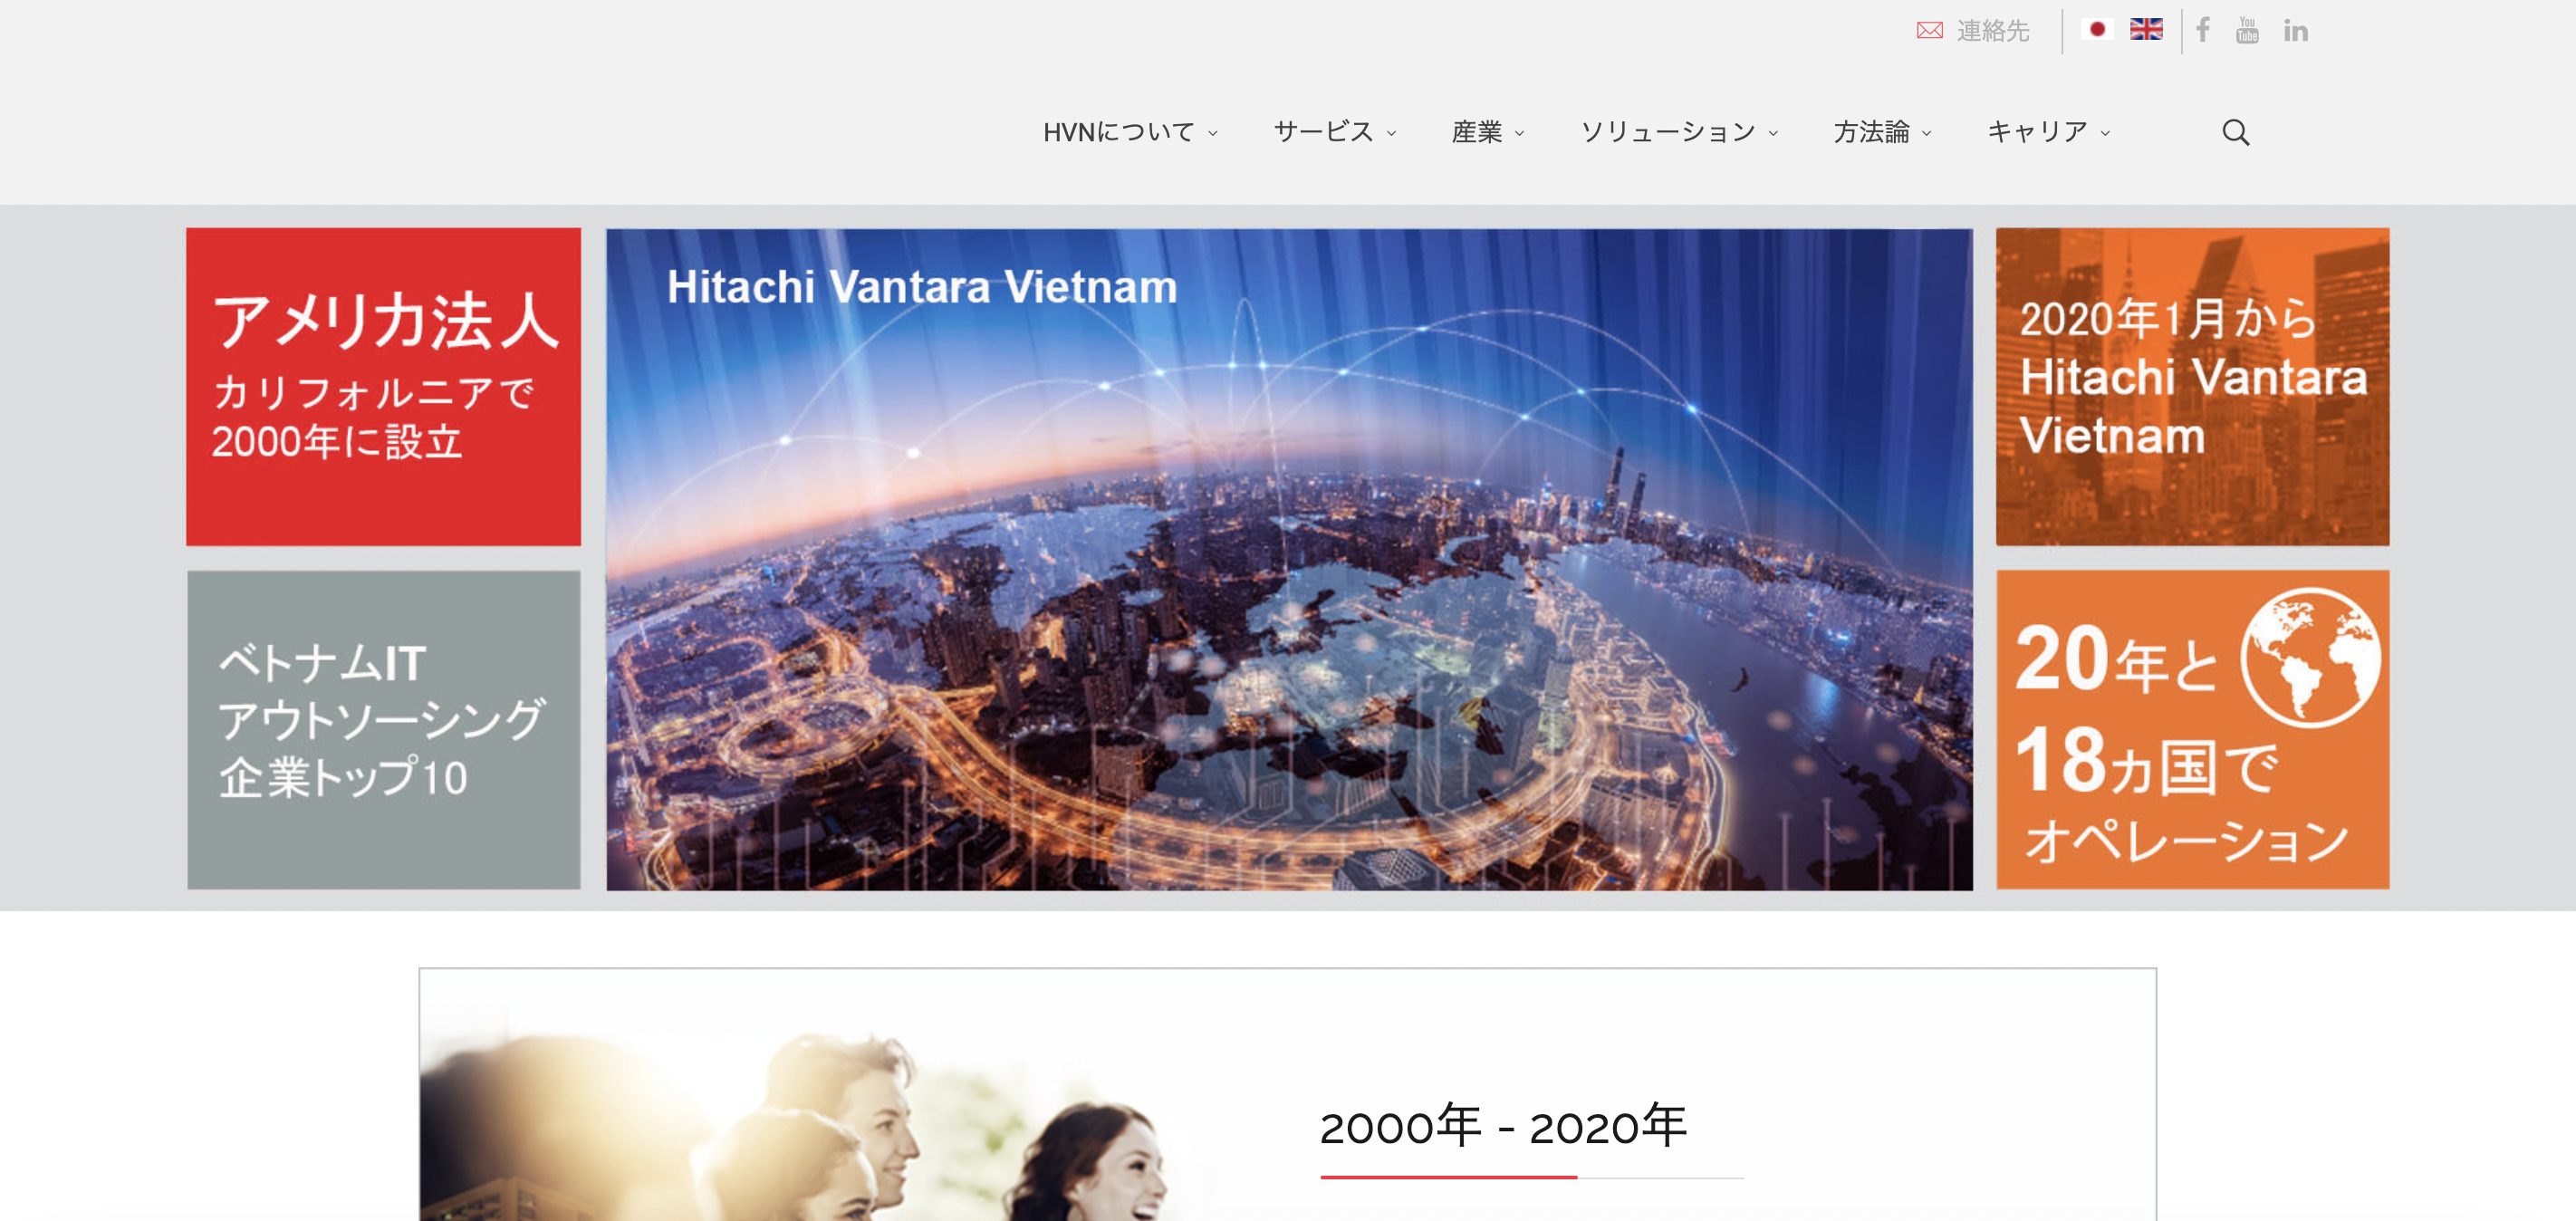 Hitachi Vantara Vietnam Co., Ltd. (HVN)のイメージ画像